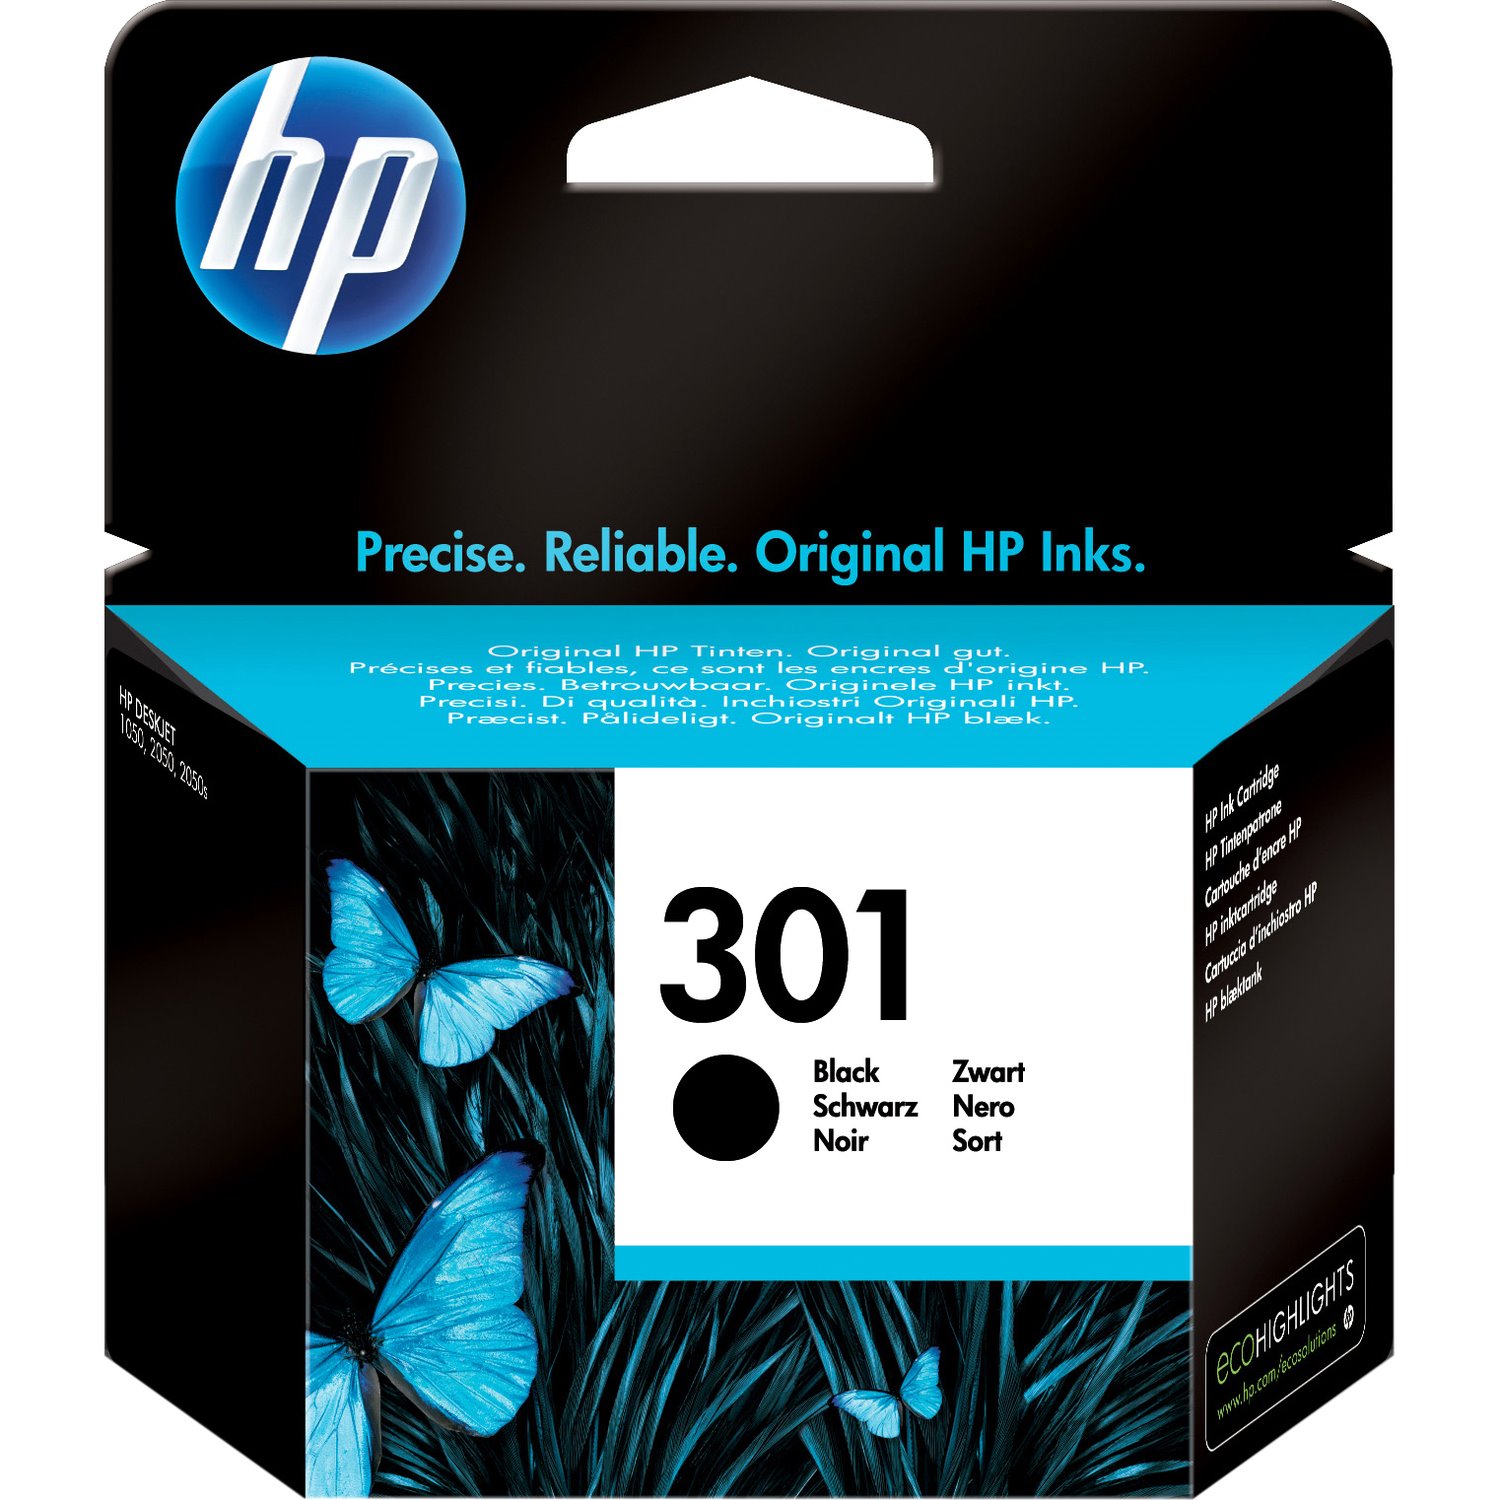 HP 301 Original Inkjet Ink Cartridge - Black - 1 Pack